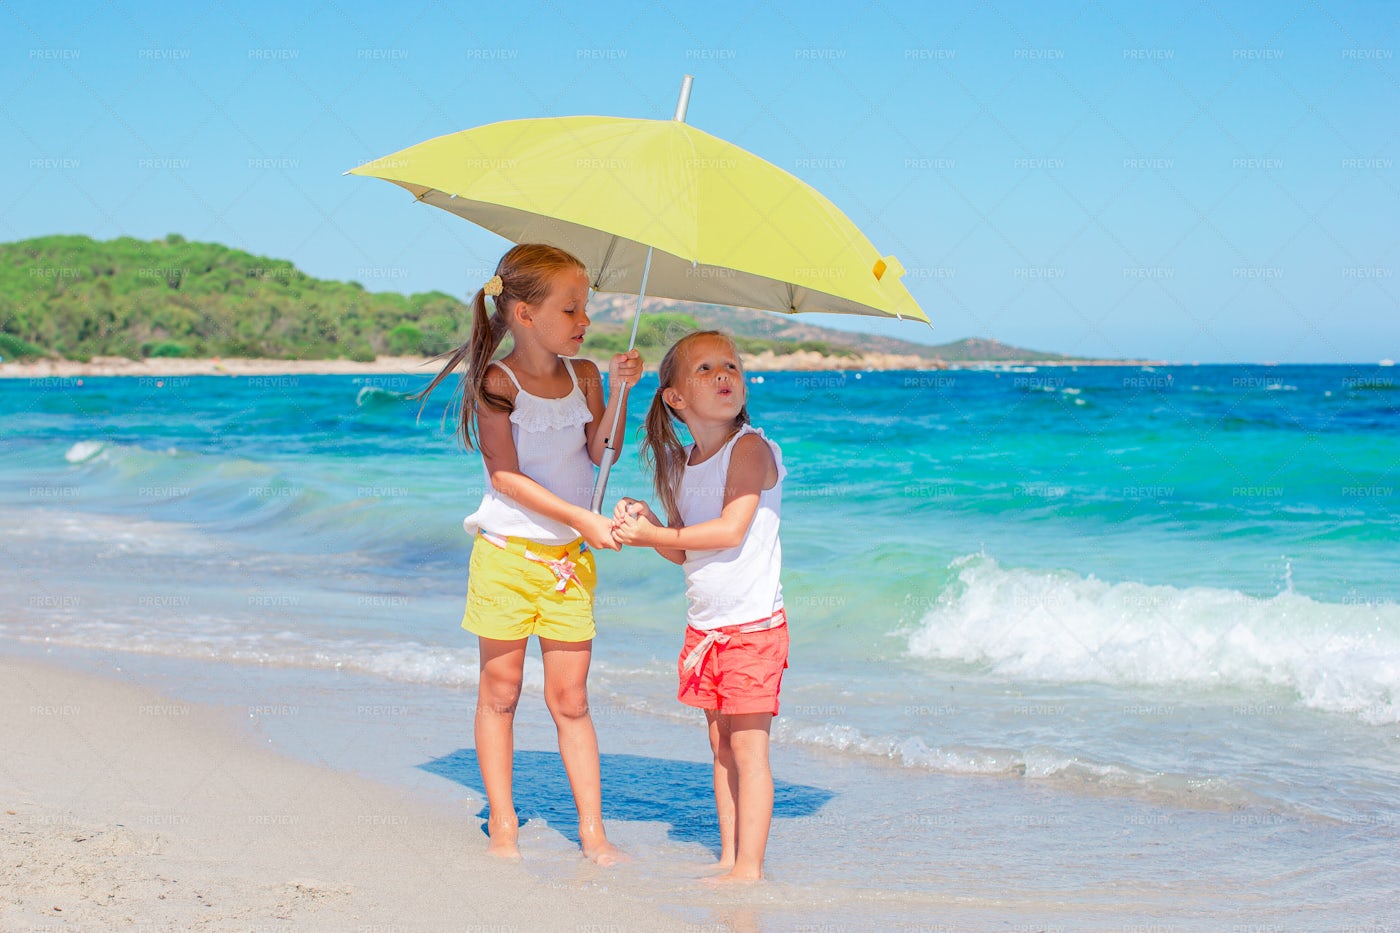 Kids With An Umbrella On The Beach: Stock Photos